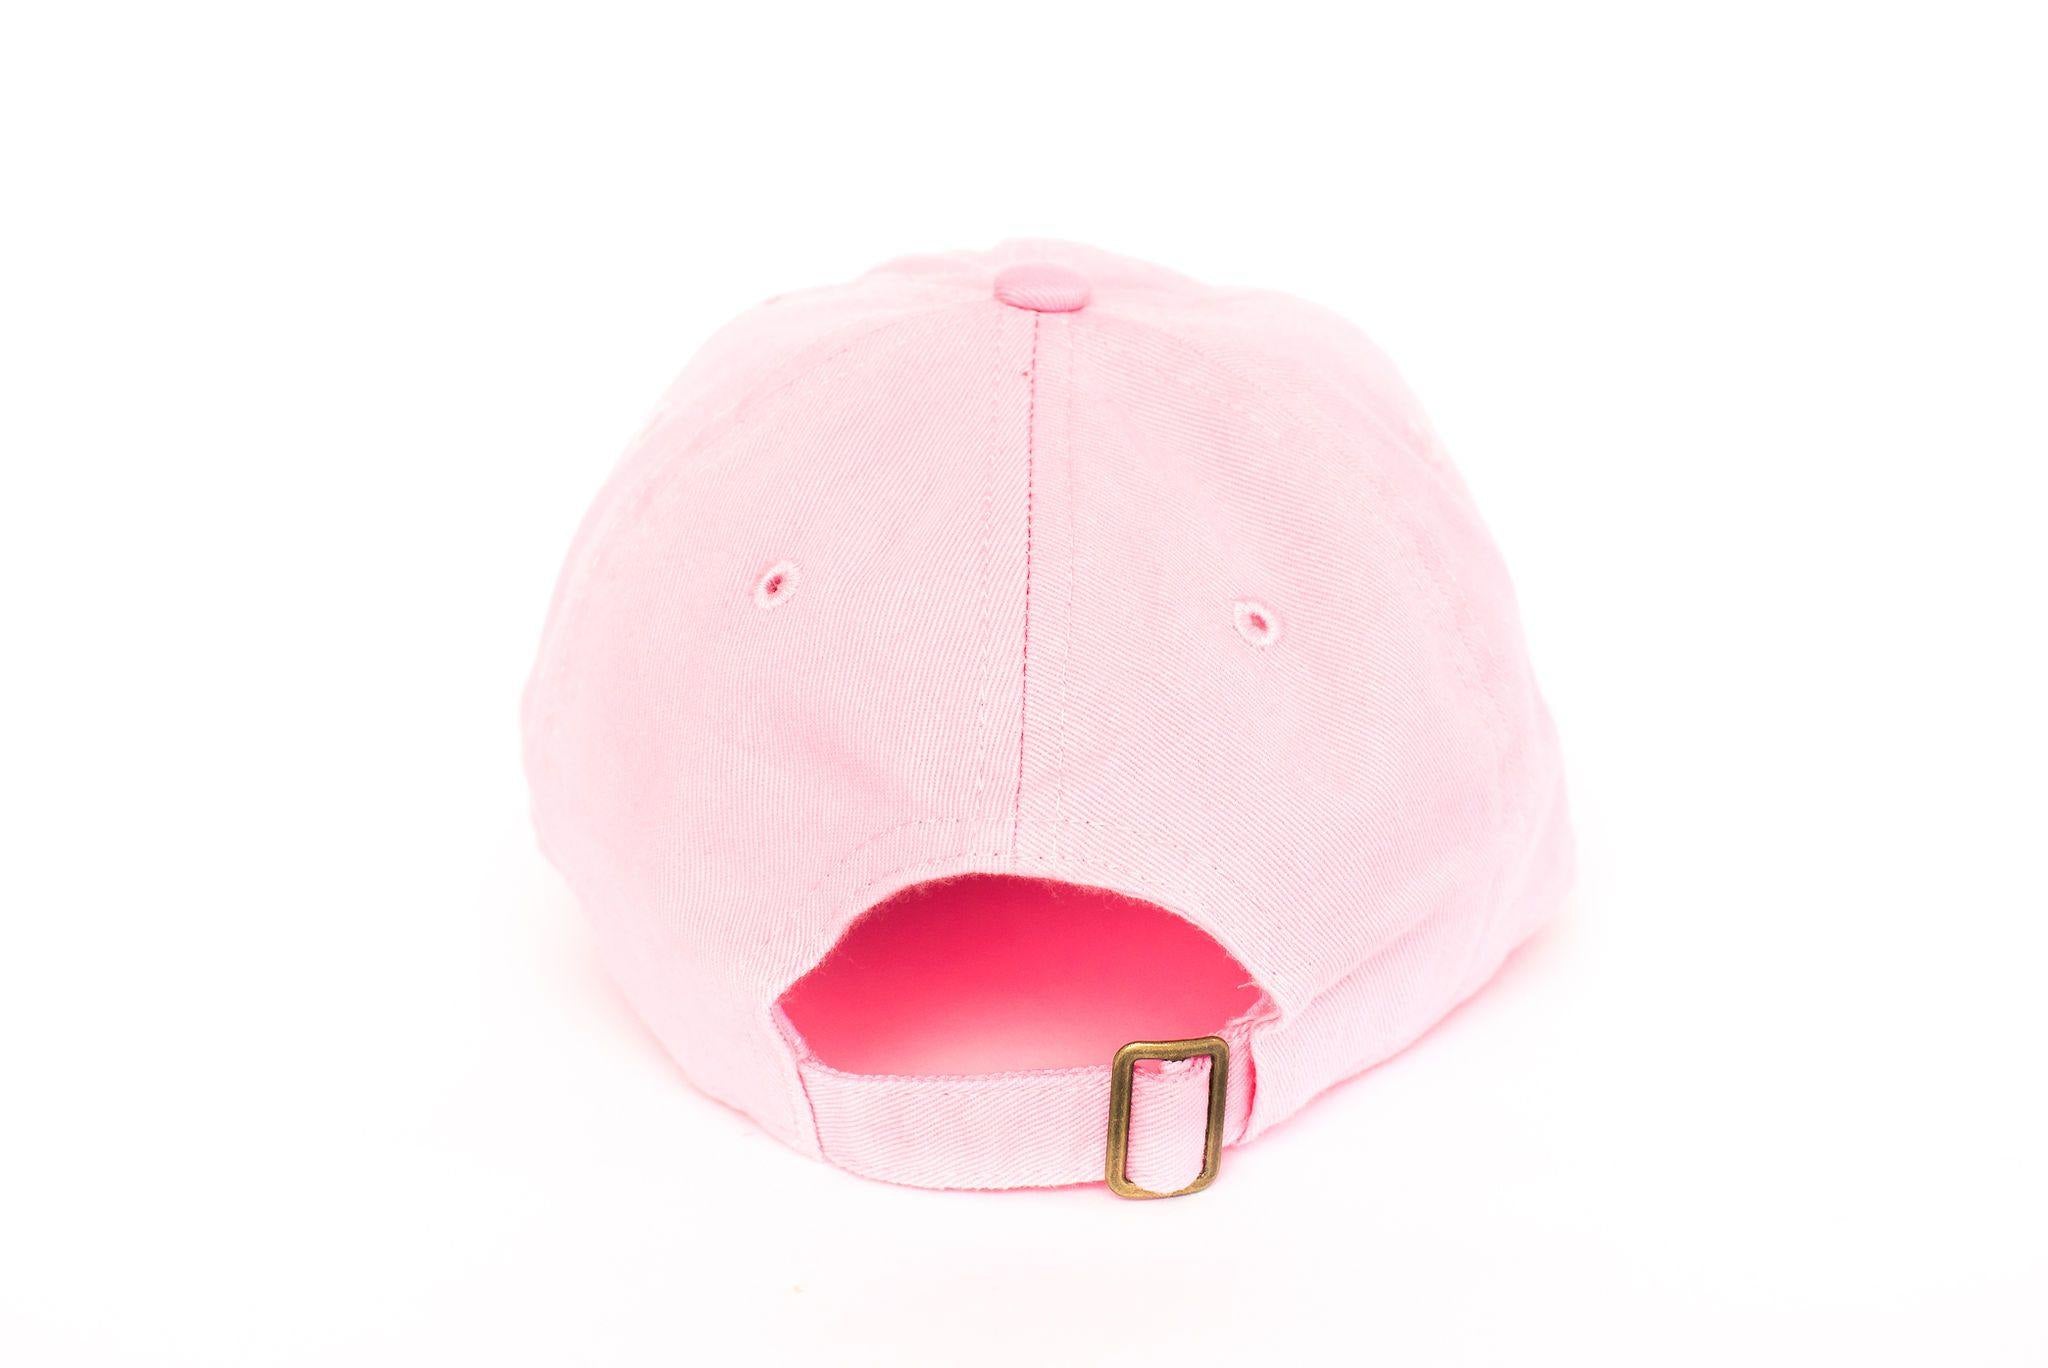 Light Pink Big Sis Hat